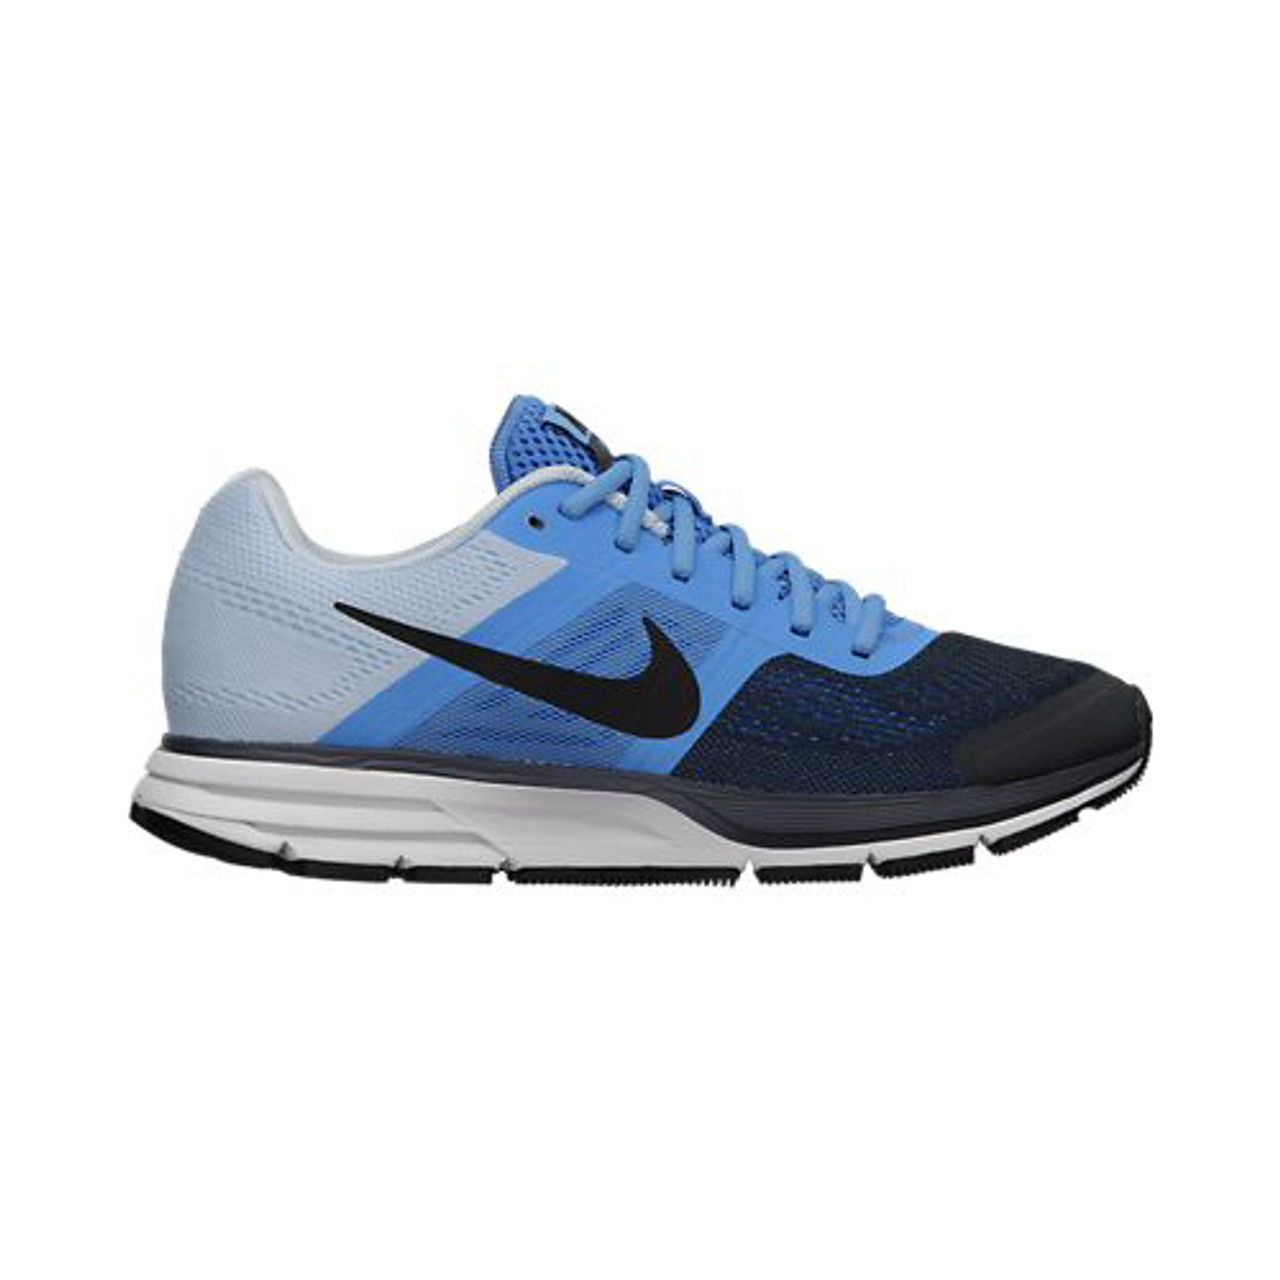 Nike Air Pegasus Blue/Black Ladies Running - Distance Blue/Anthracite/Blue/Black | Discount Ladies Athletic More - Shoolu.com | Shoolu.com